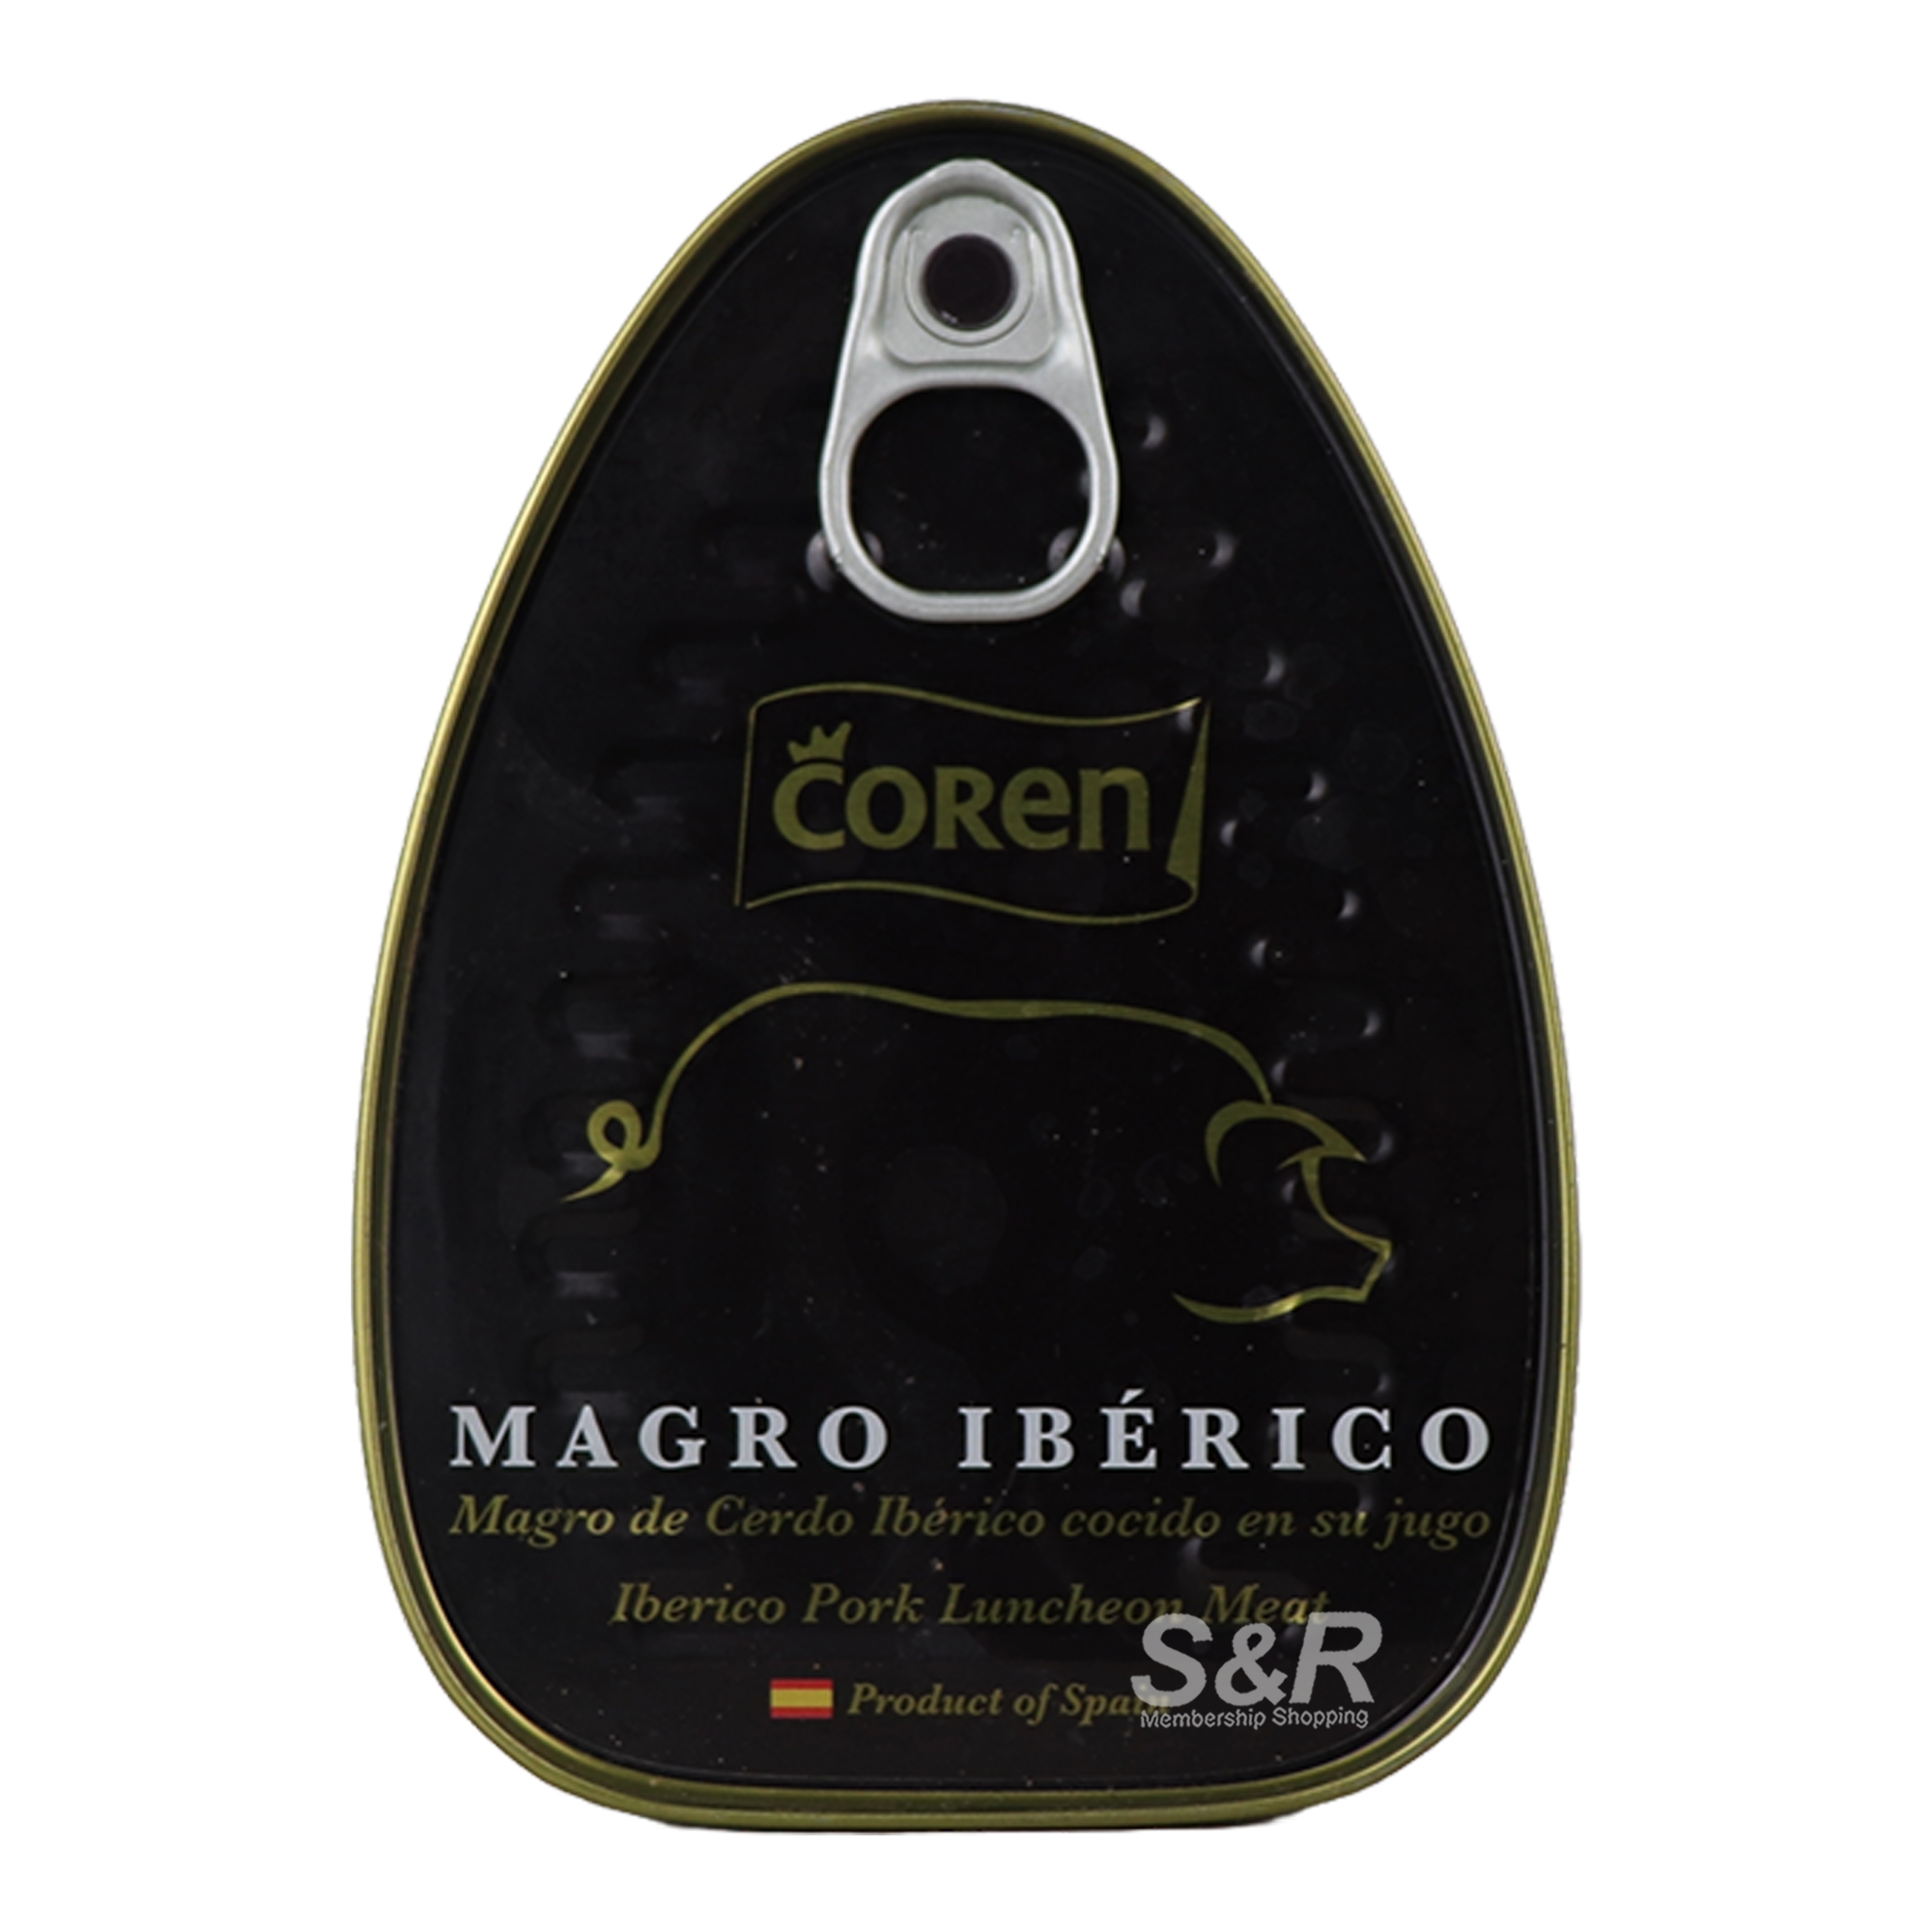 Coren Margo Iberico Luncheon Meat 200g